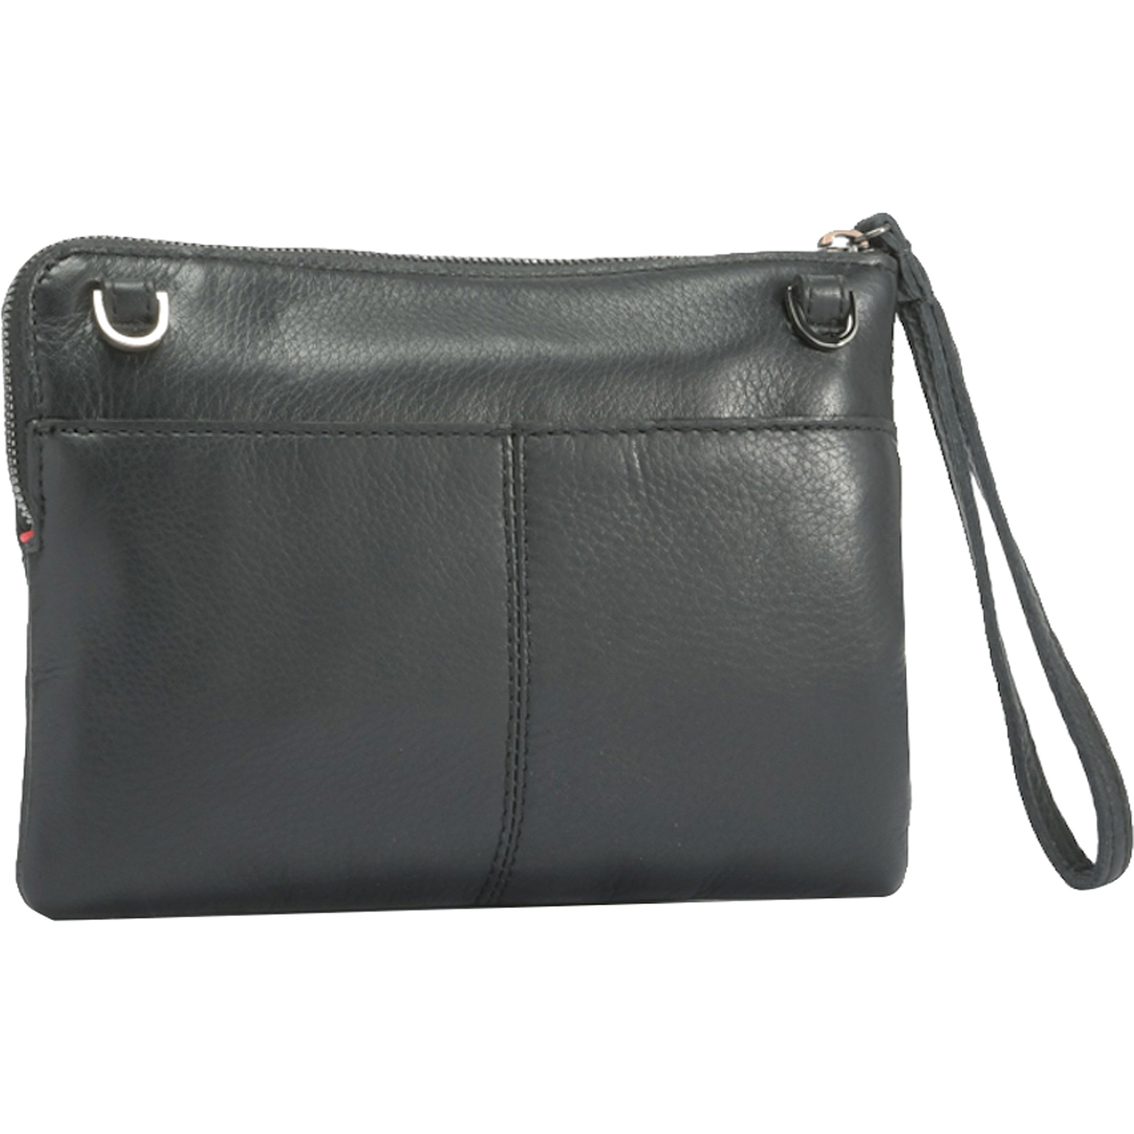 Hammitt Nash Small Zip Handbag - Image 3 of 4